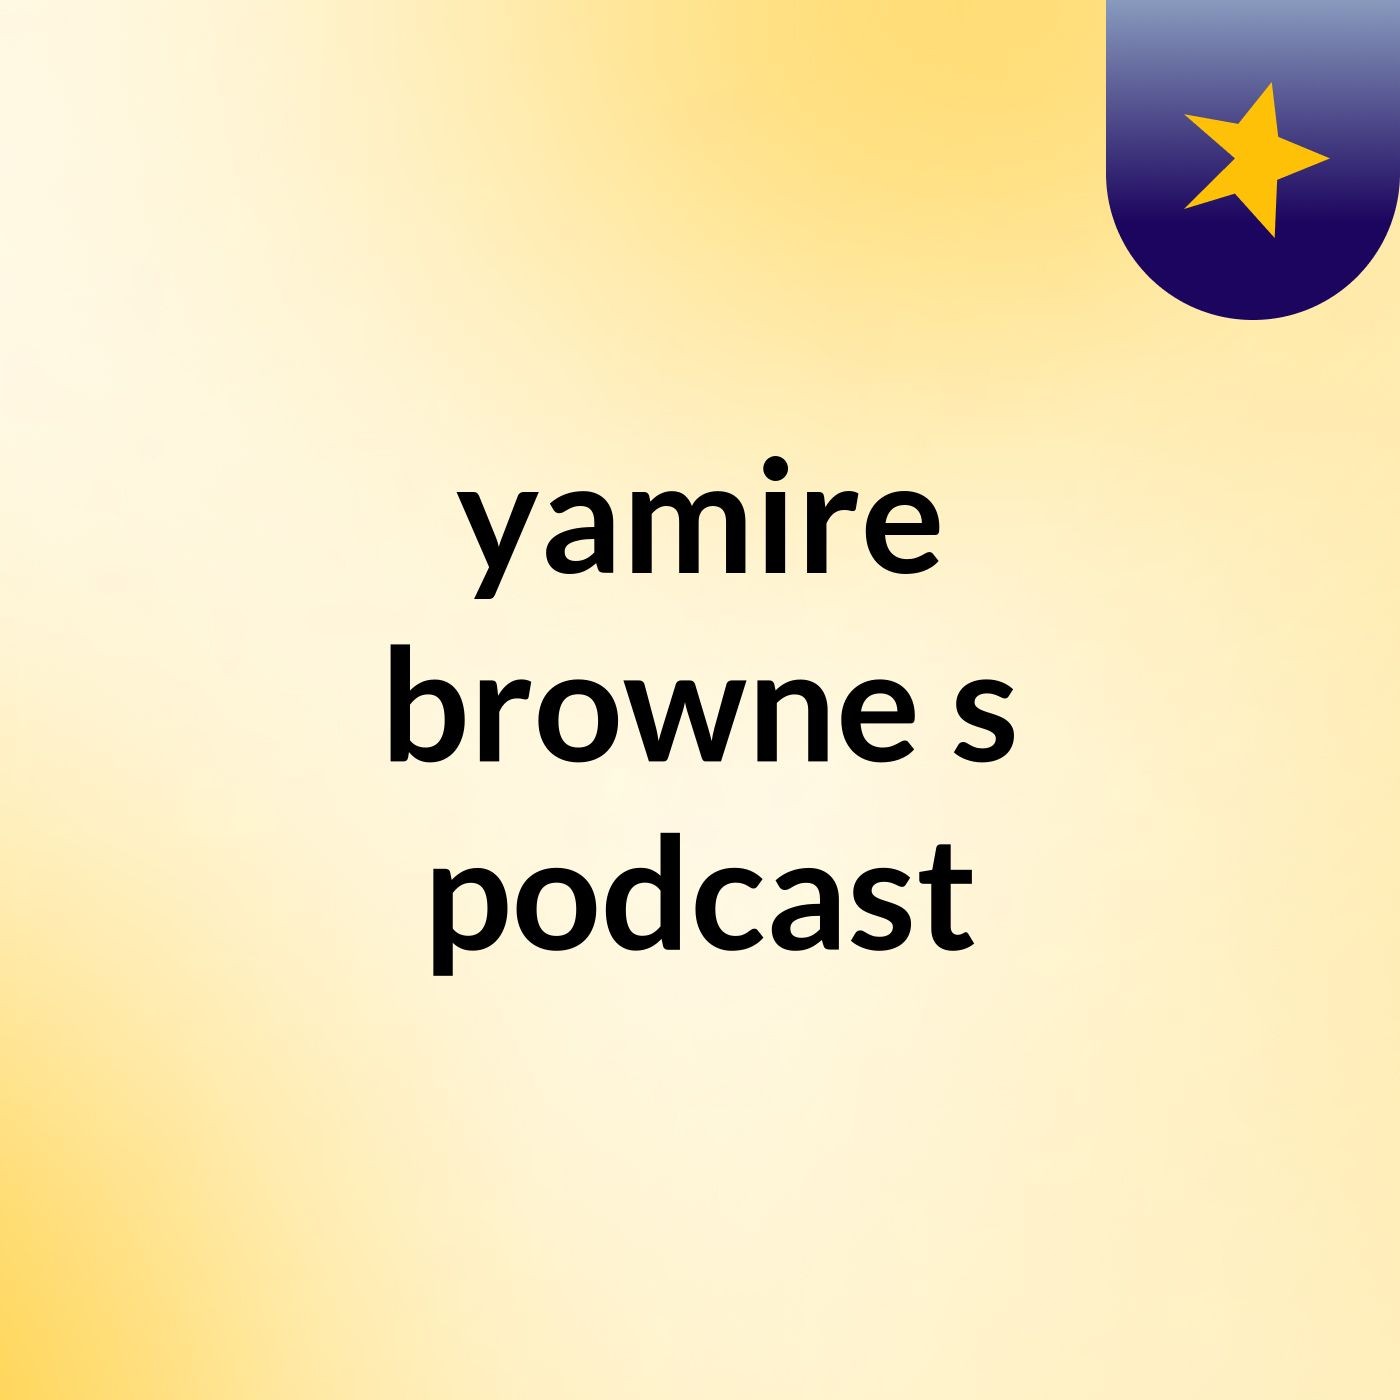 yamire browne's podcast